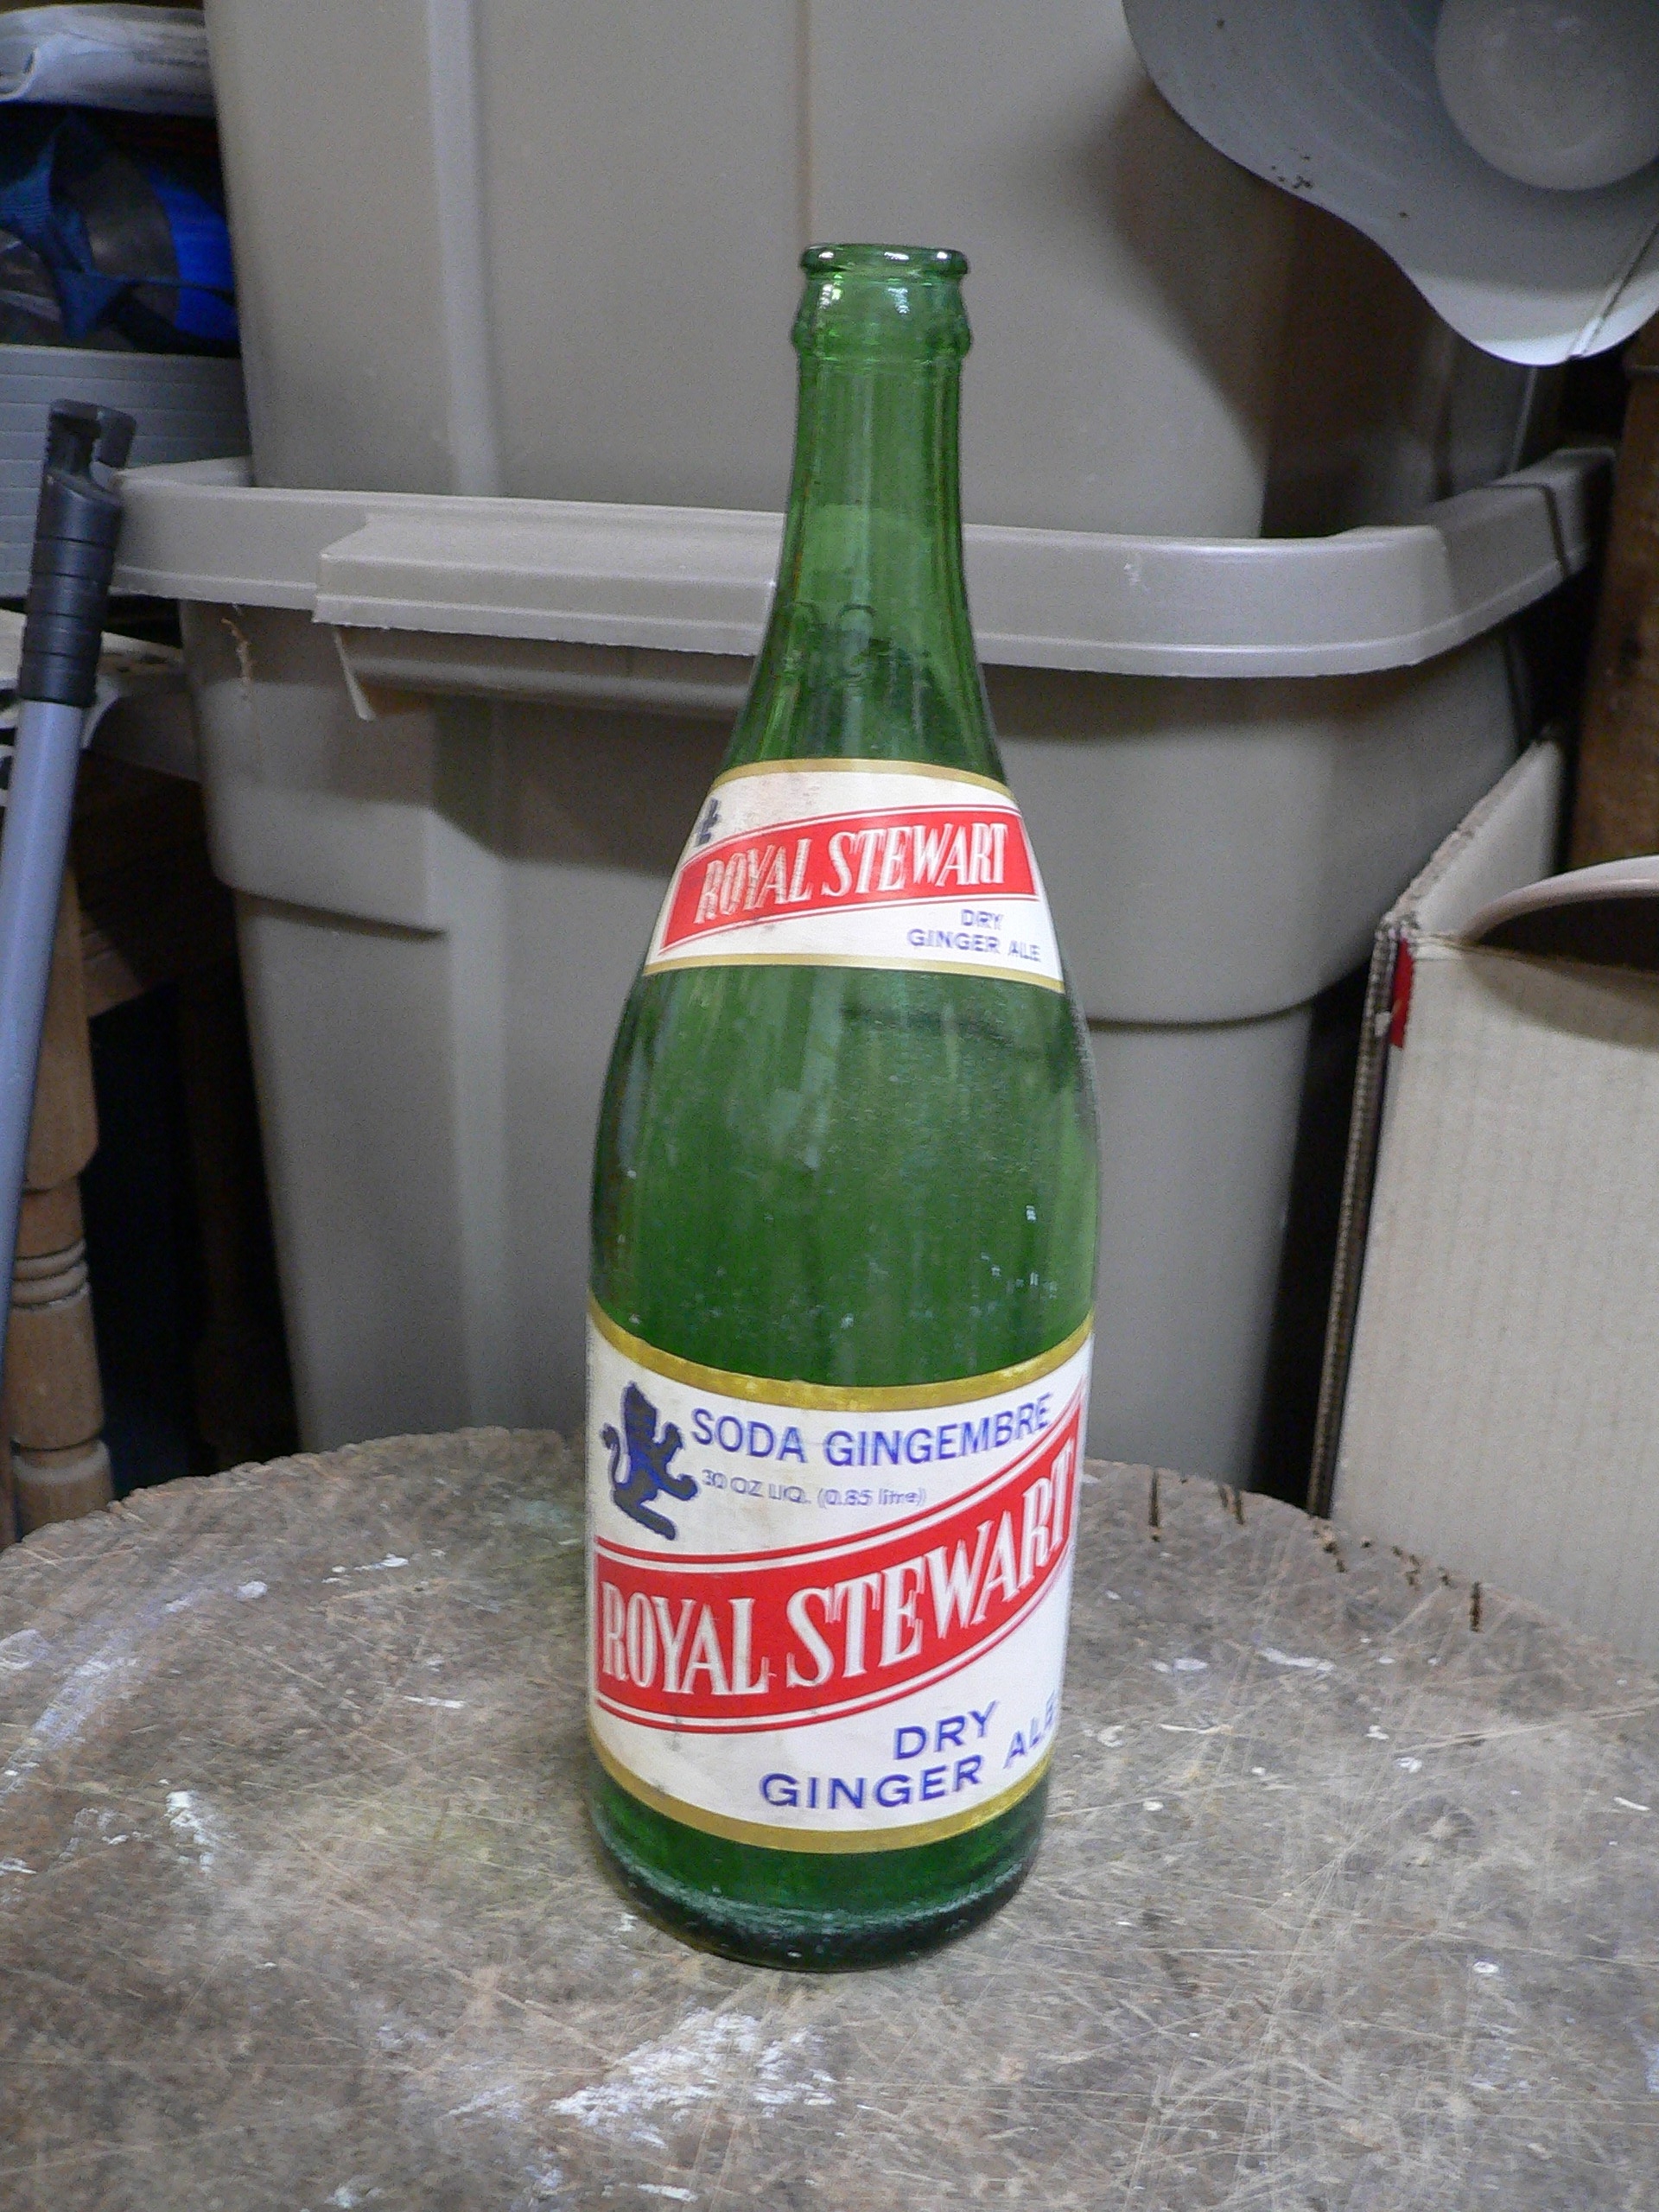 Bouteille vintage soda gingembre royal stewart # 7678.3